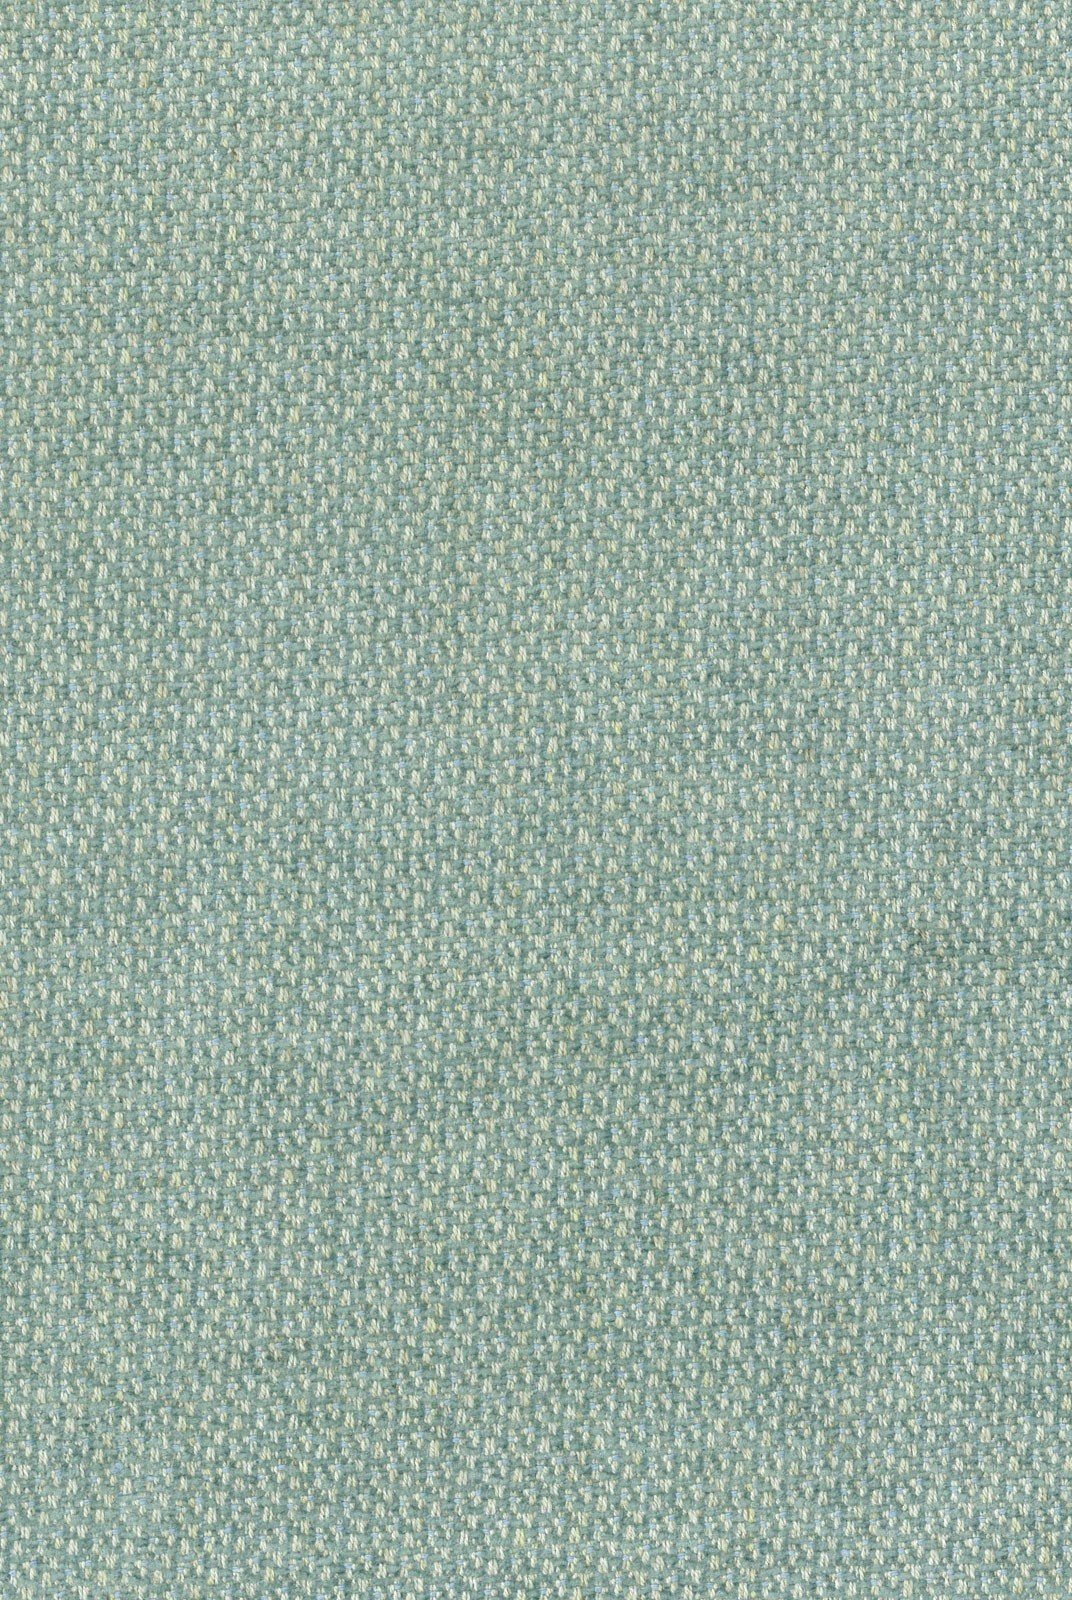 Nina Campbell Fabric - Cathay Weaves Zuli Aqua NCF4162-01